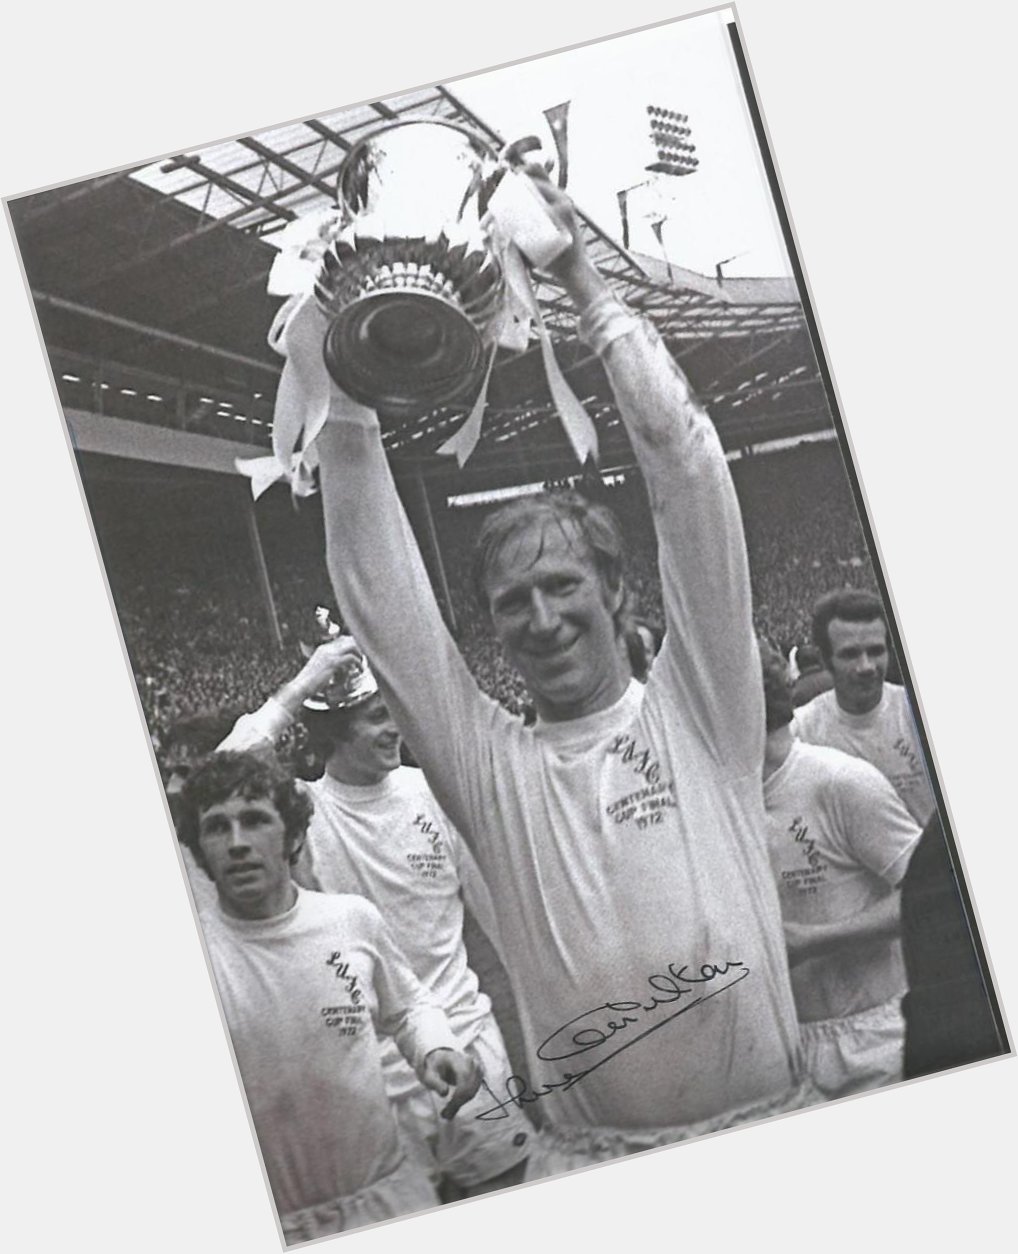 Happy 85 th birthday to a Leeds legend big jack charlton 